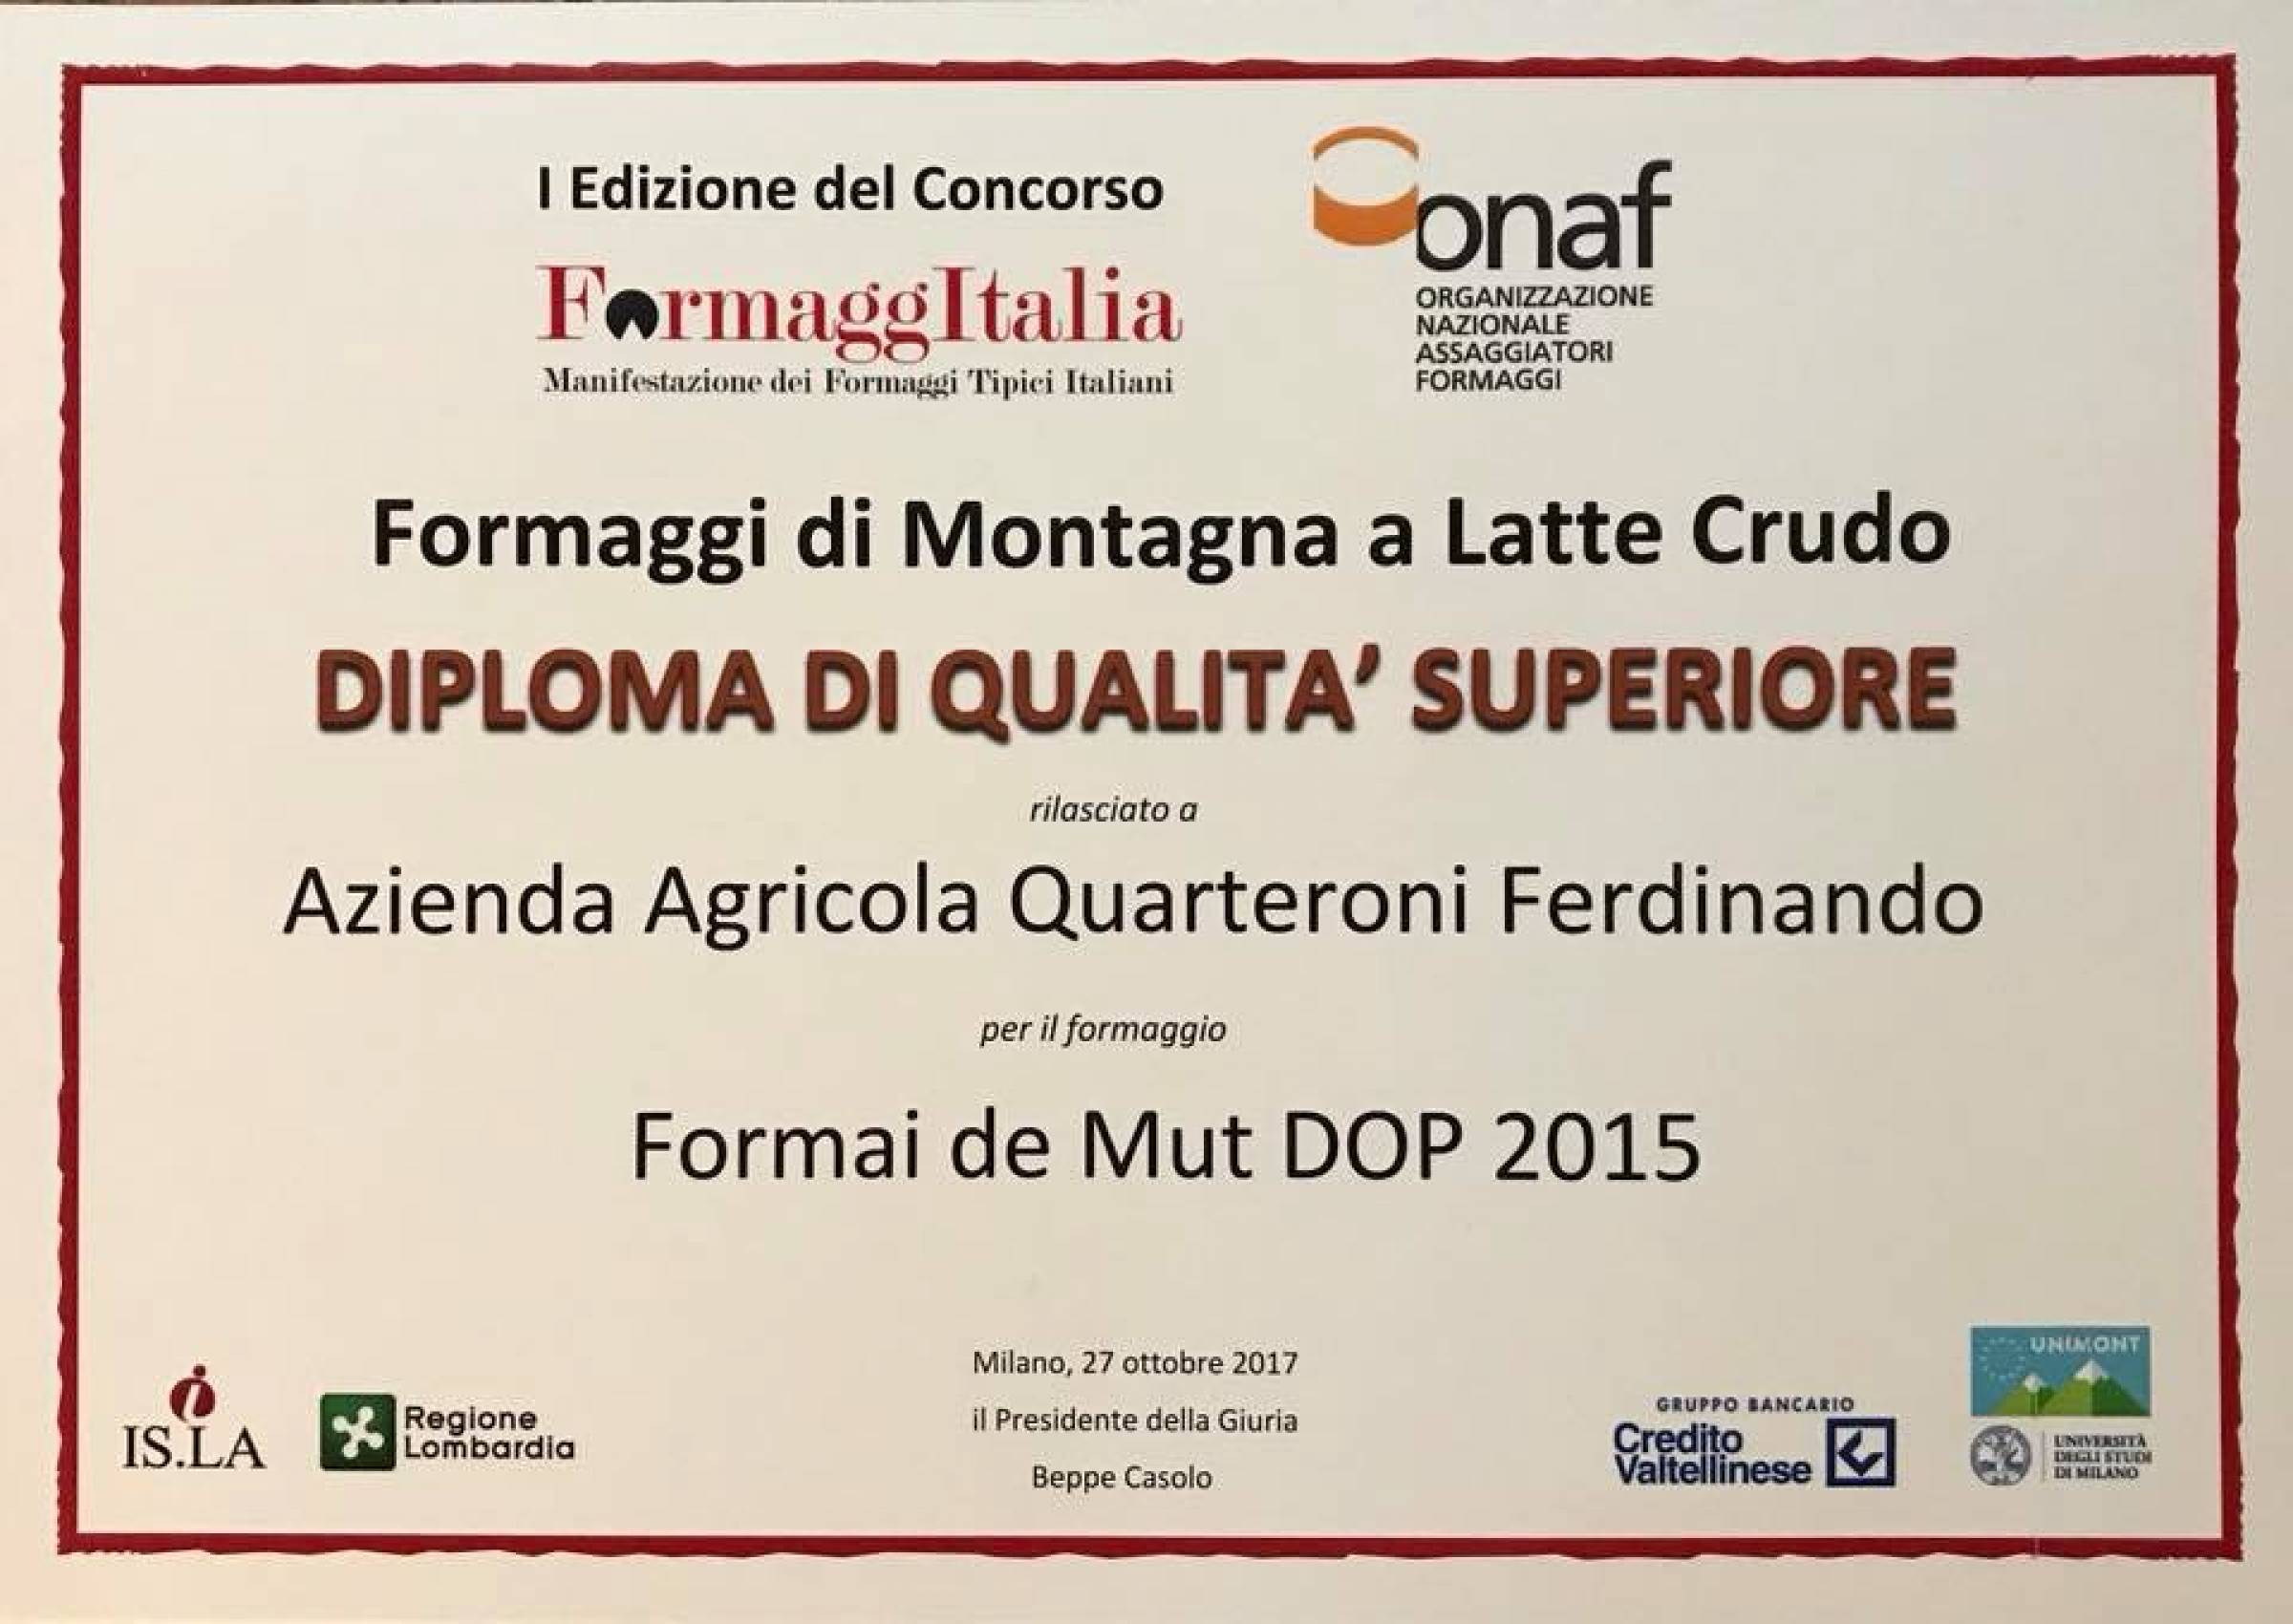 Our "Formai de Mut" 2015 Cheese rewarded at the FormaggItalia fair